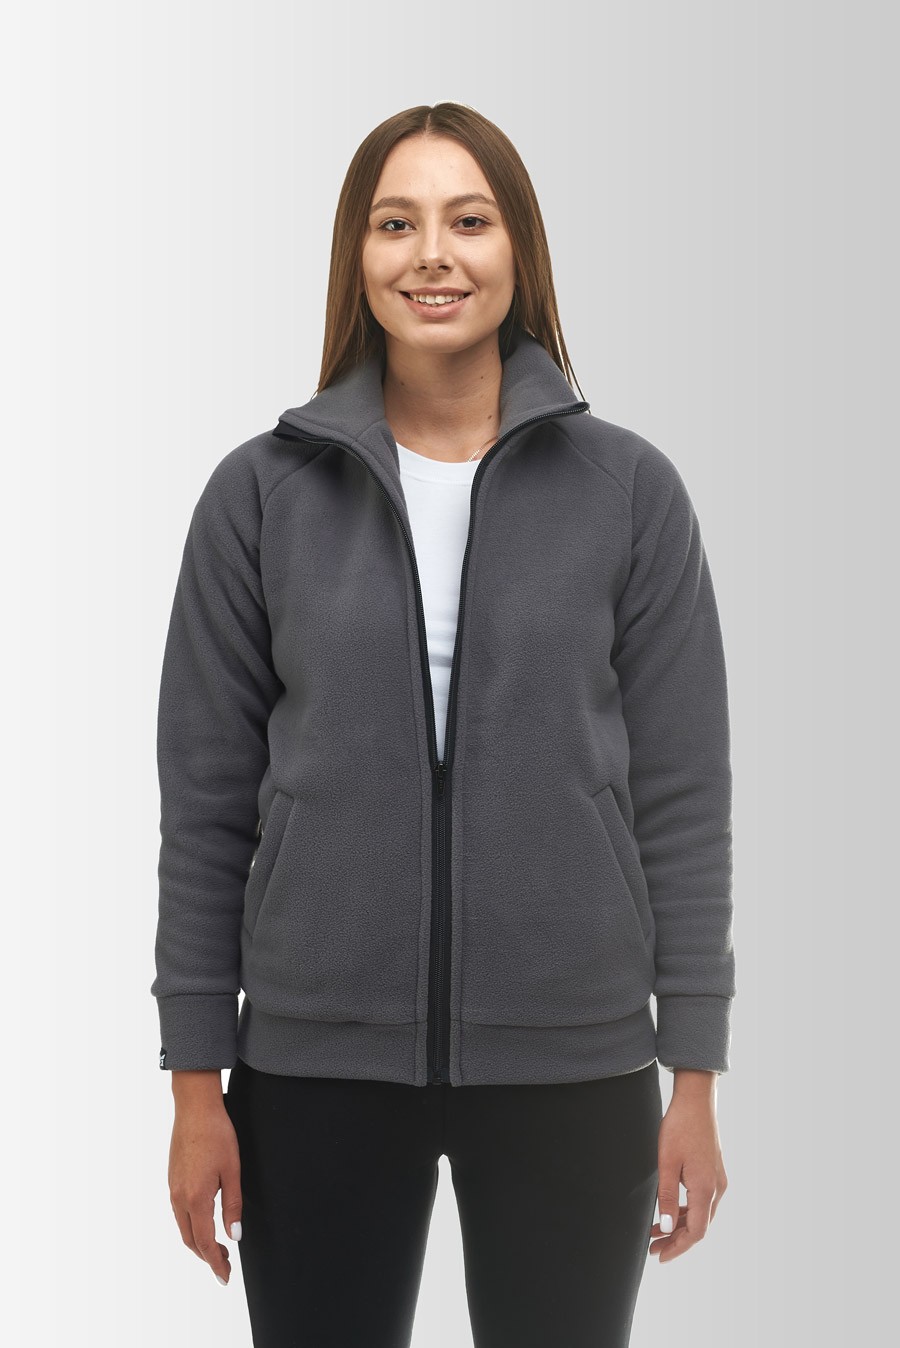 Women's fleece jacket Synevyr 260 grey